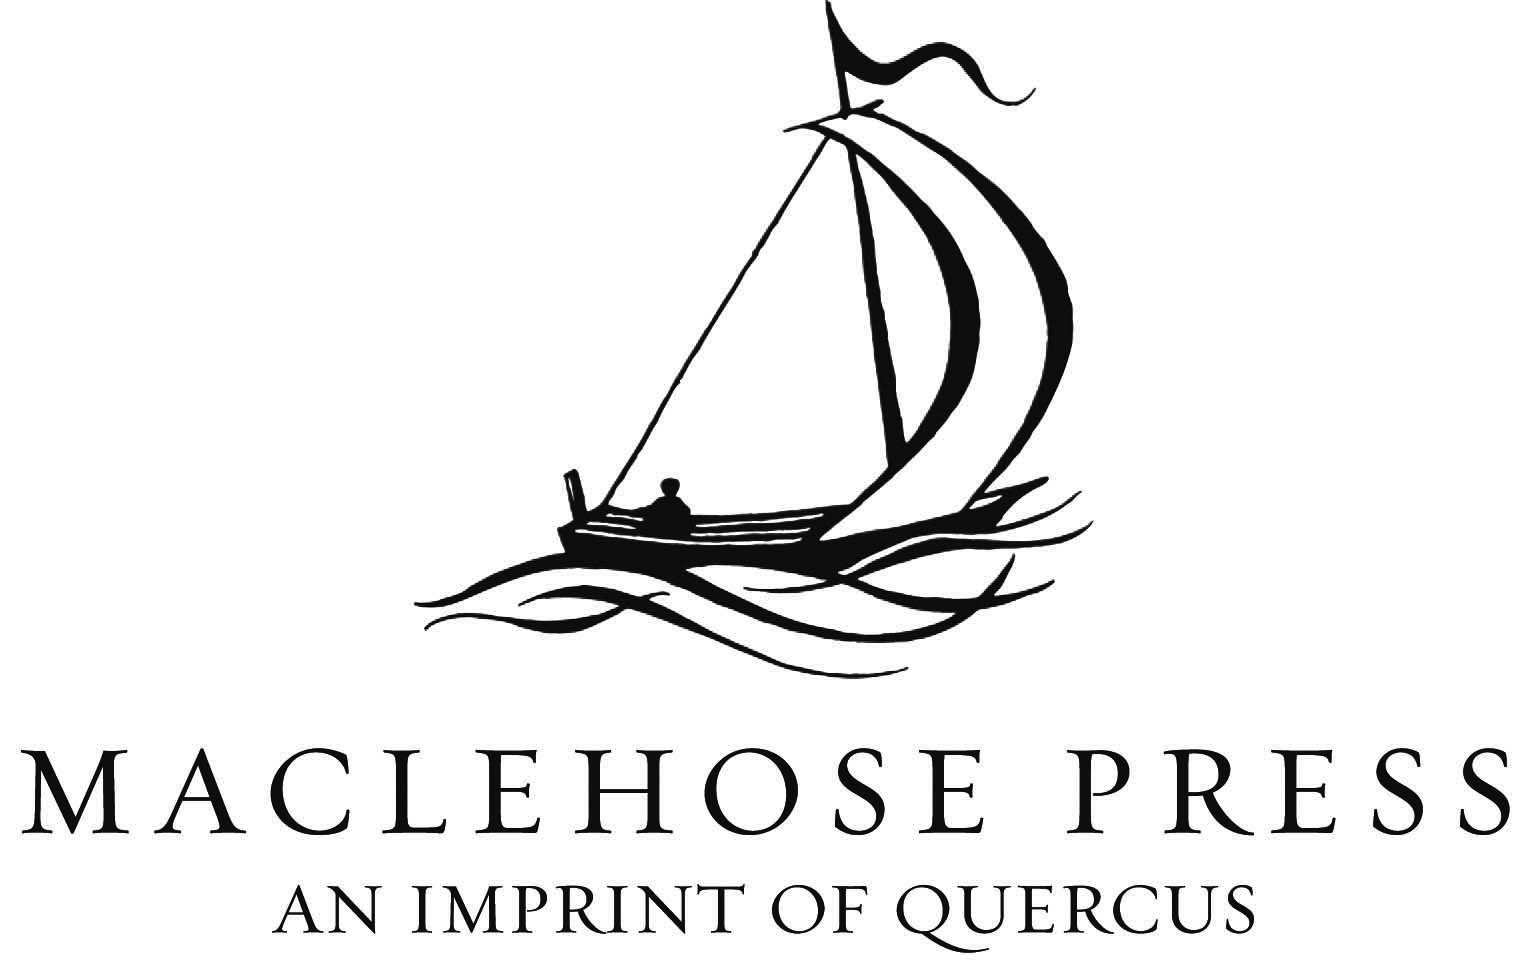 MacLehose Press